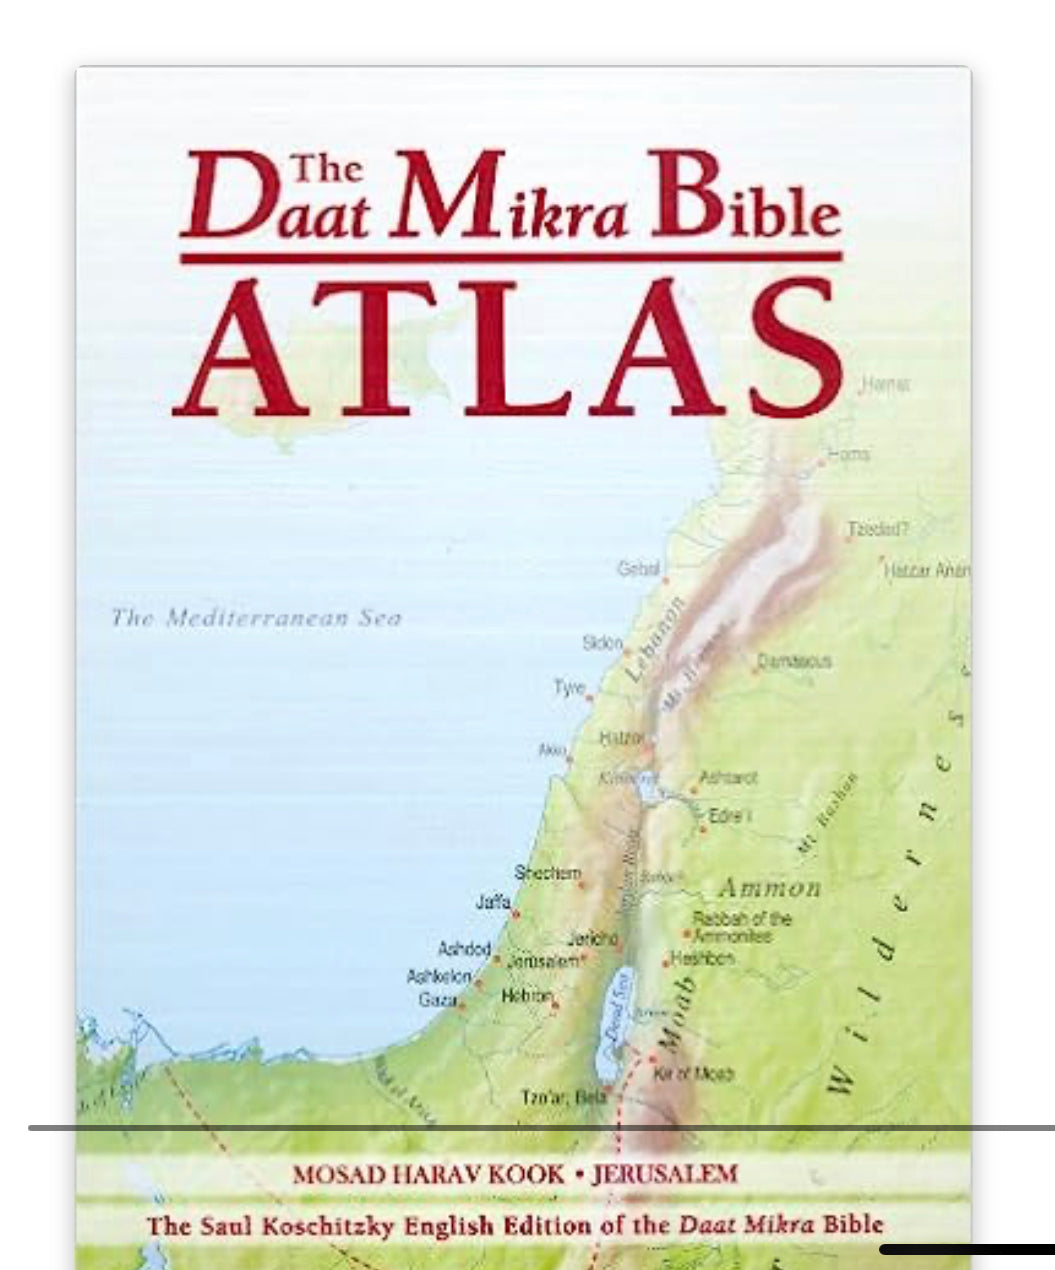 The Daat Mikra Bible Atlas